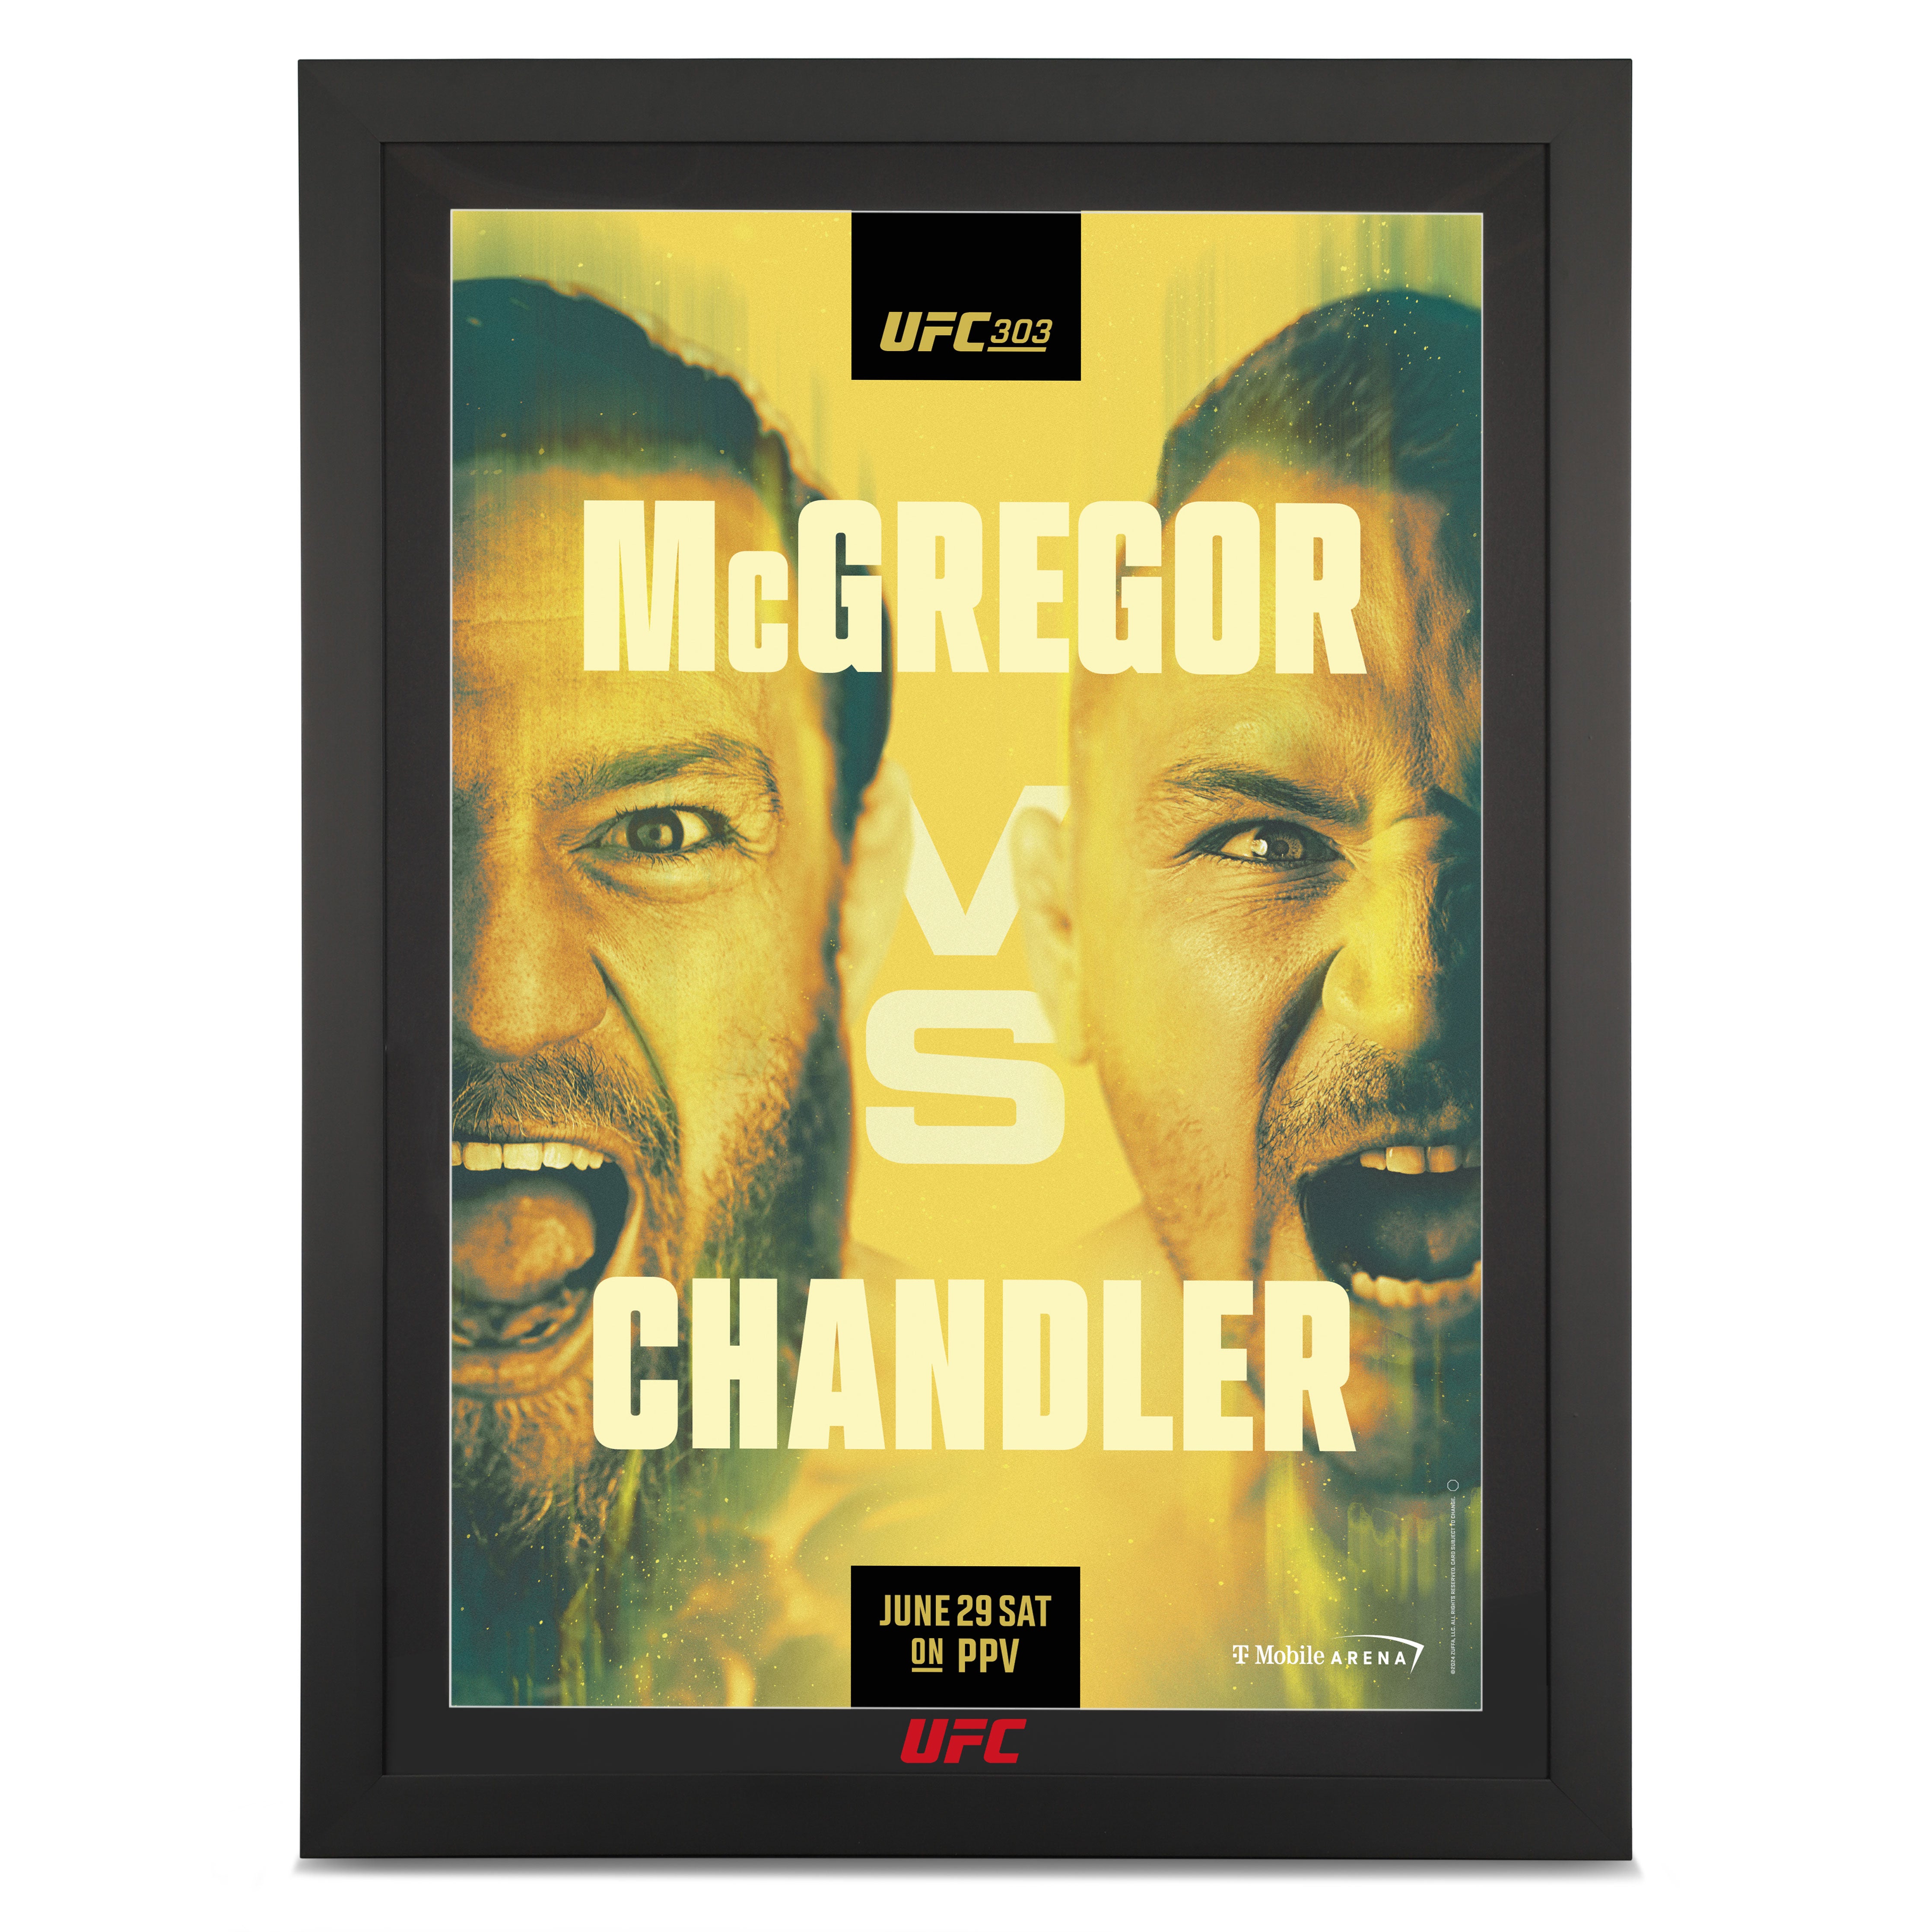 UFC 303: MCGREGOR VS CHANDLER AUTOGRAPHED EVENT POSTER - FIRST EDITION